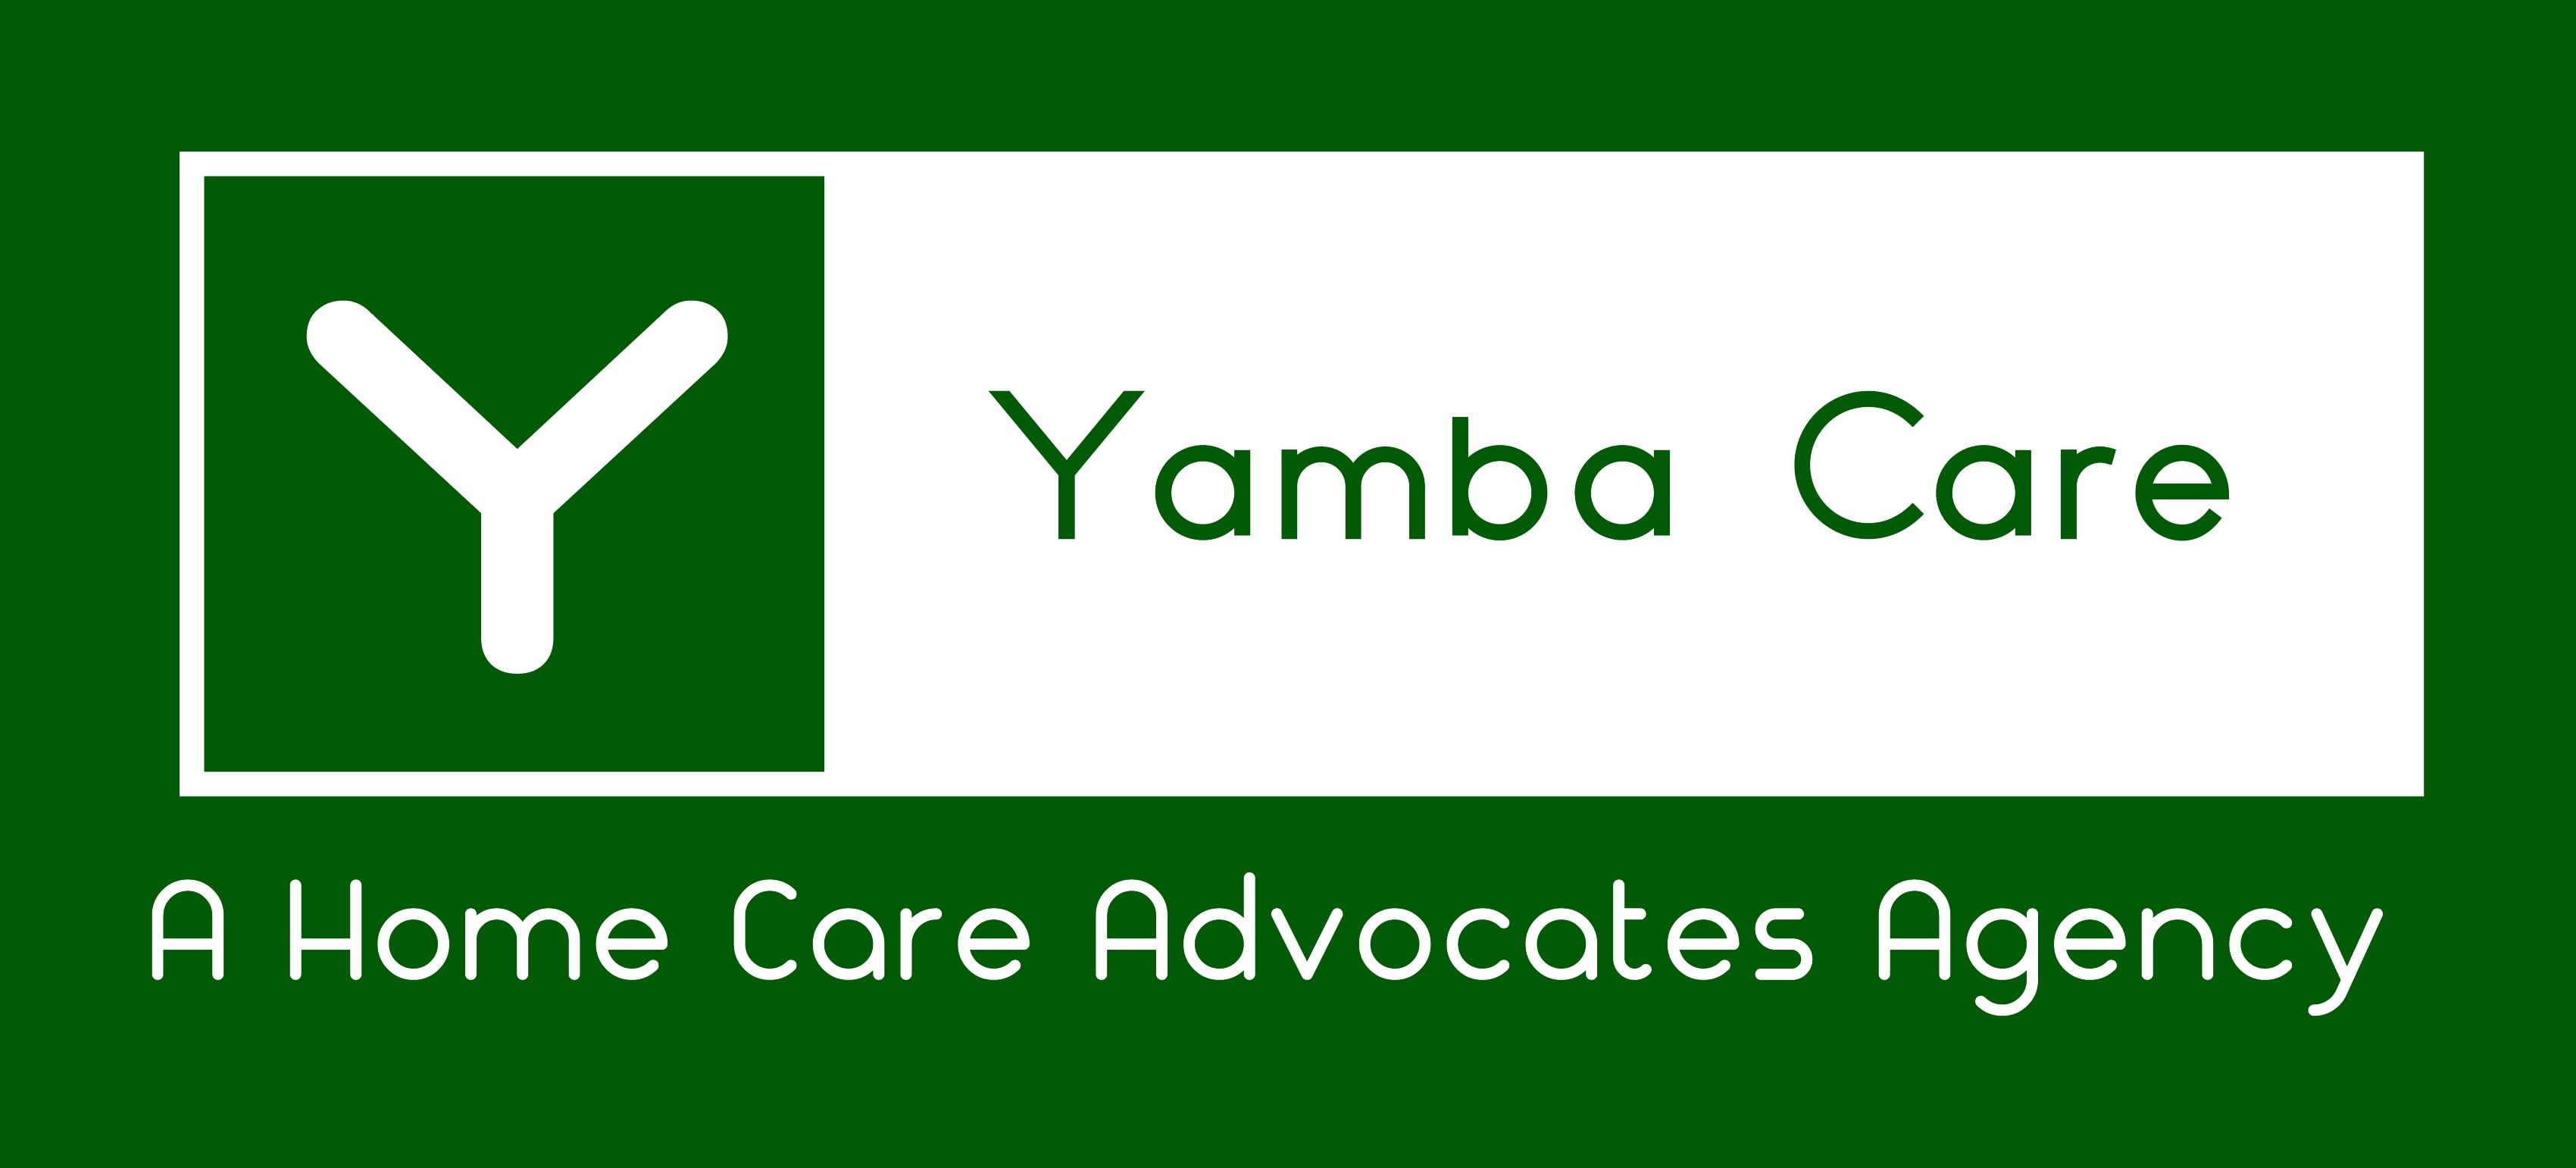 Yamba Care senior services